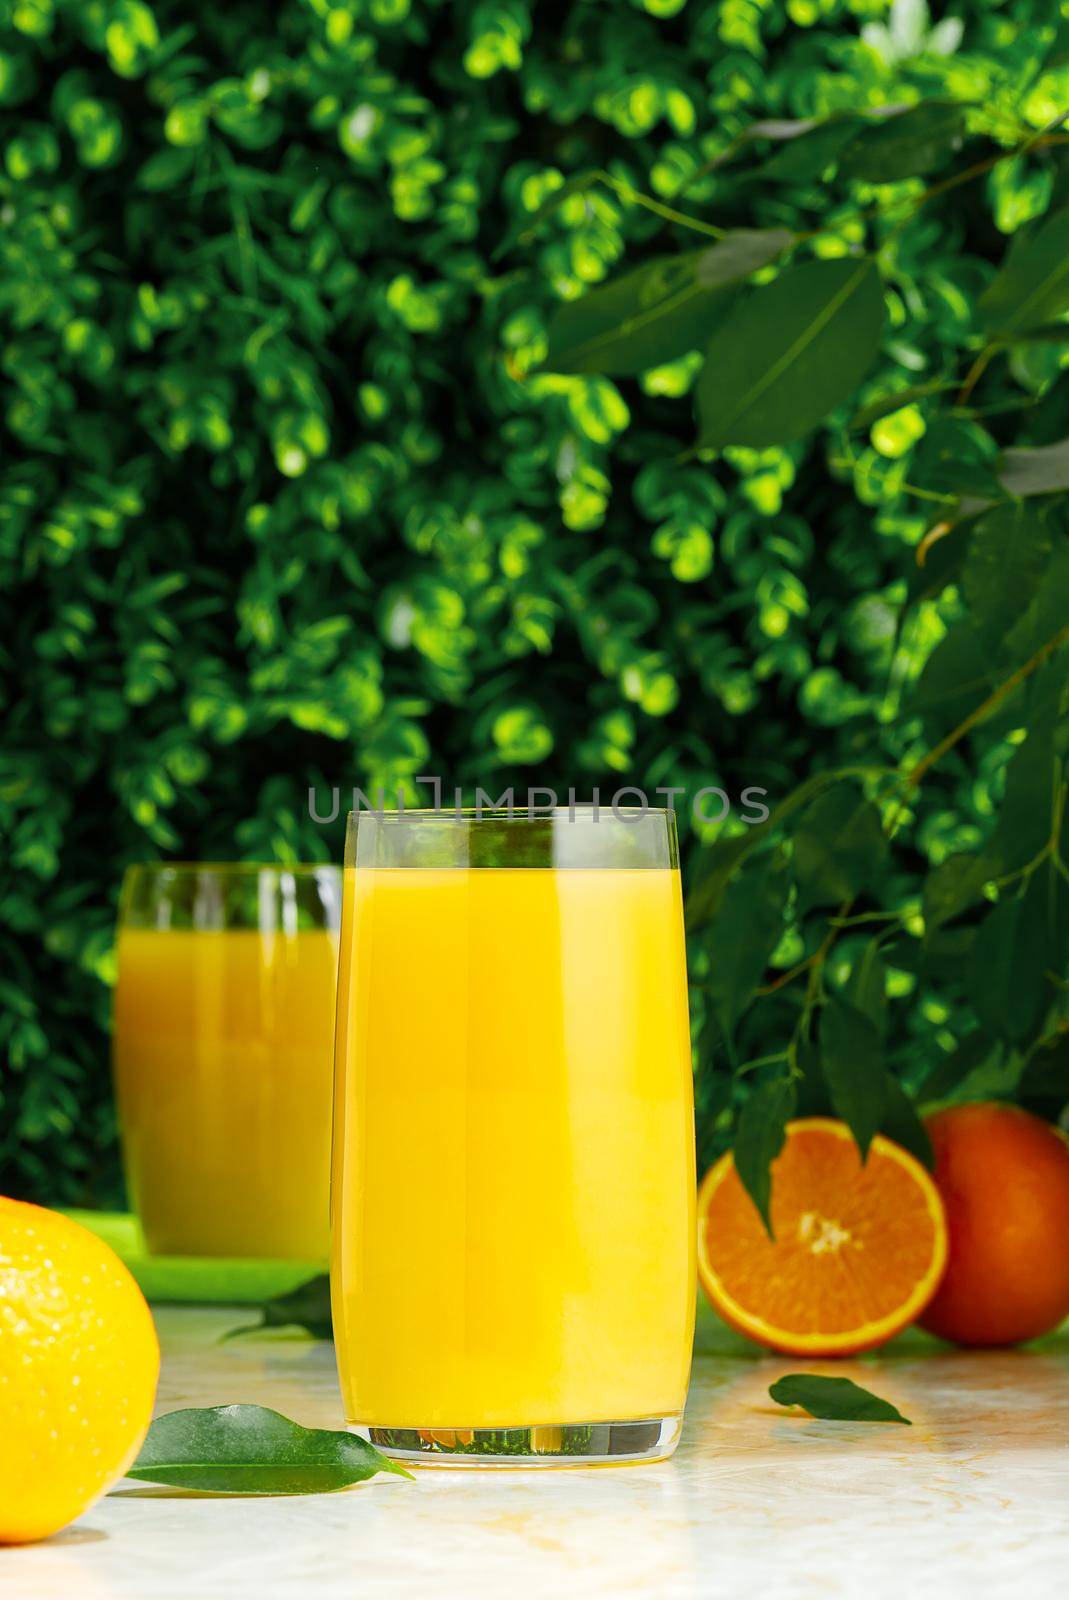 glass of fresh orange juice with fresh fruits over a green background. fresh orange juice